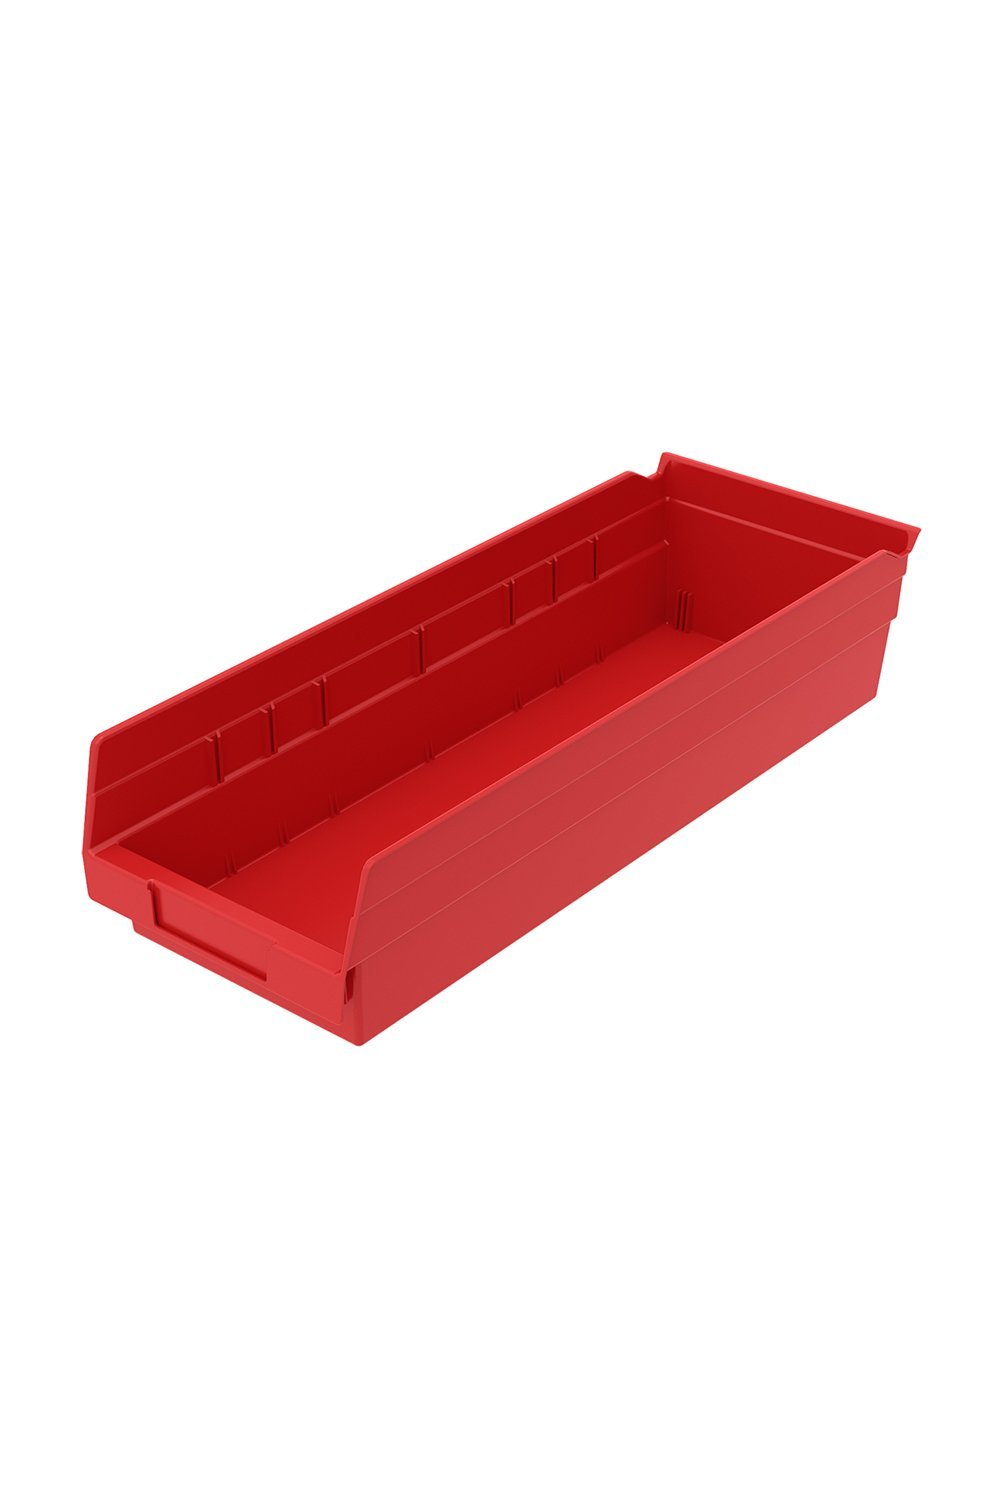 Shelf Bin for 18"D Shelves Bins & Containers Acart 17-7/8'' x 6-5/8'' x 4'' Red 